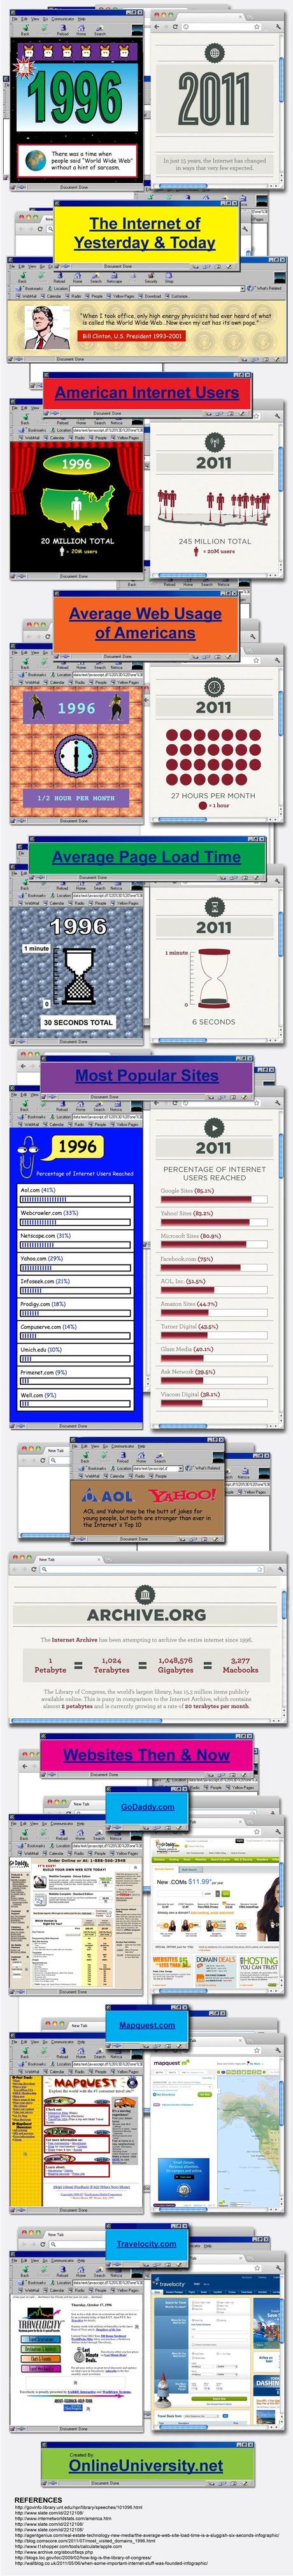 Paragone fra internet nel 1996 e oggi